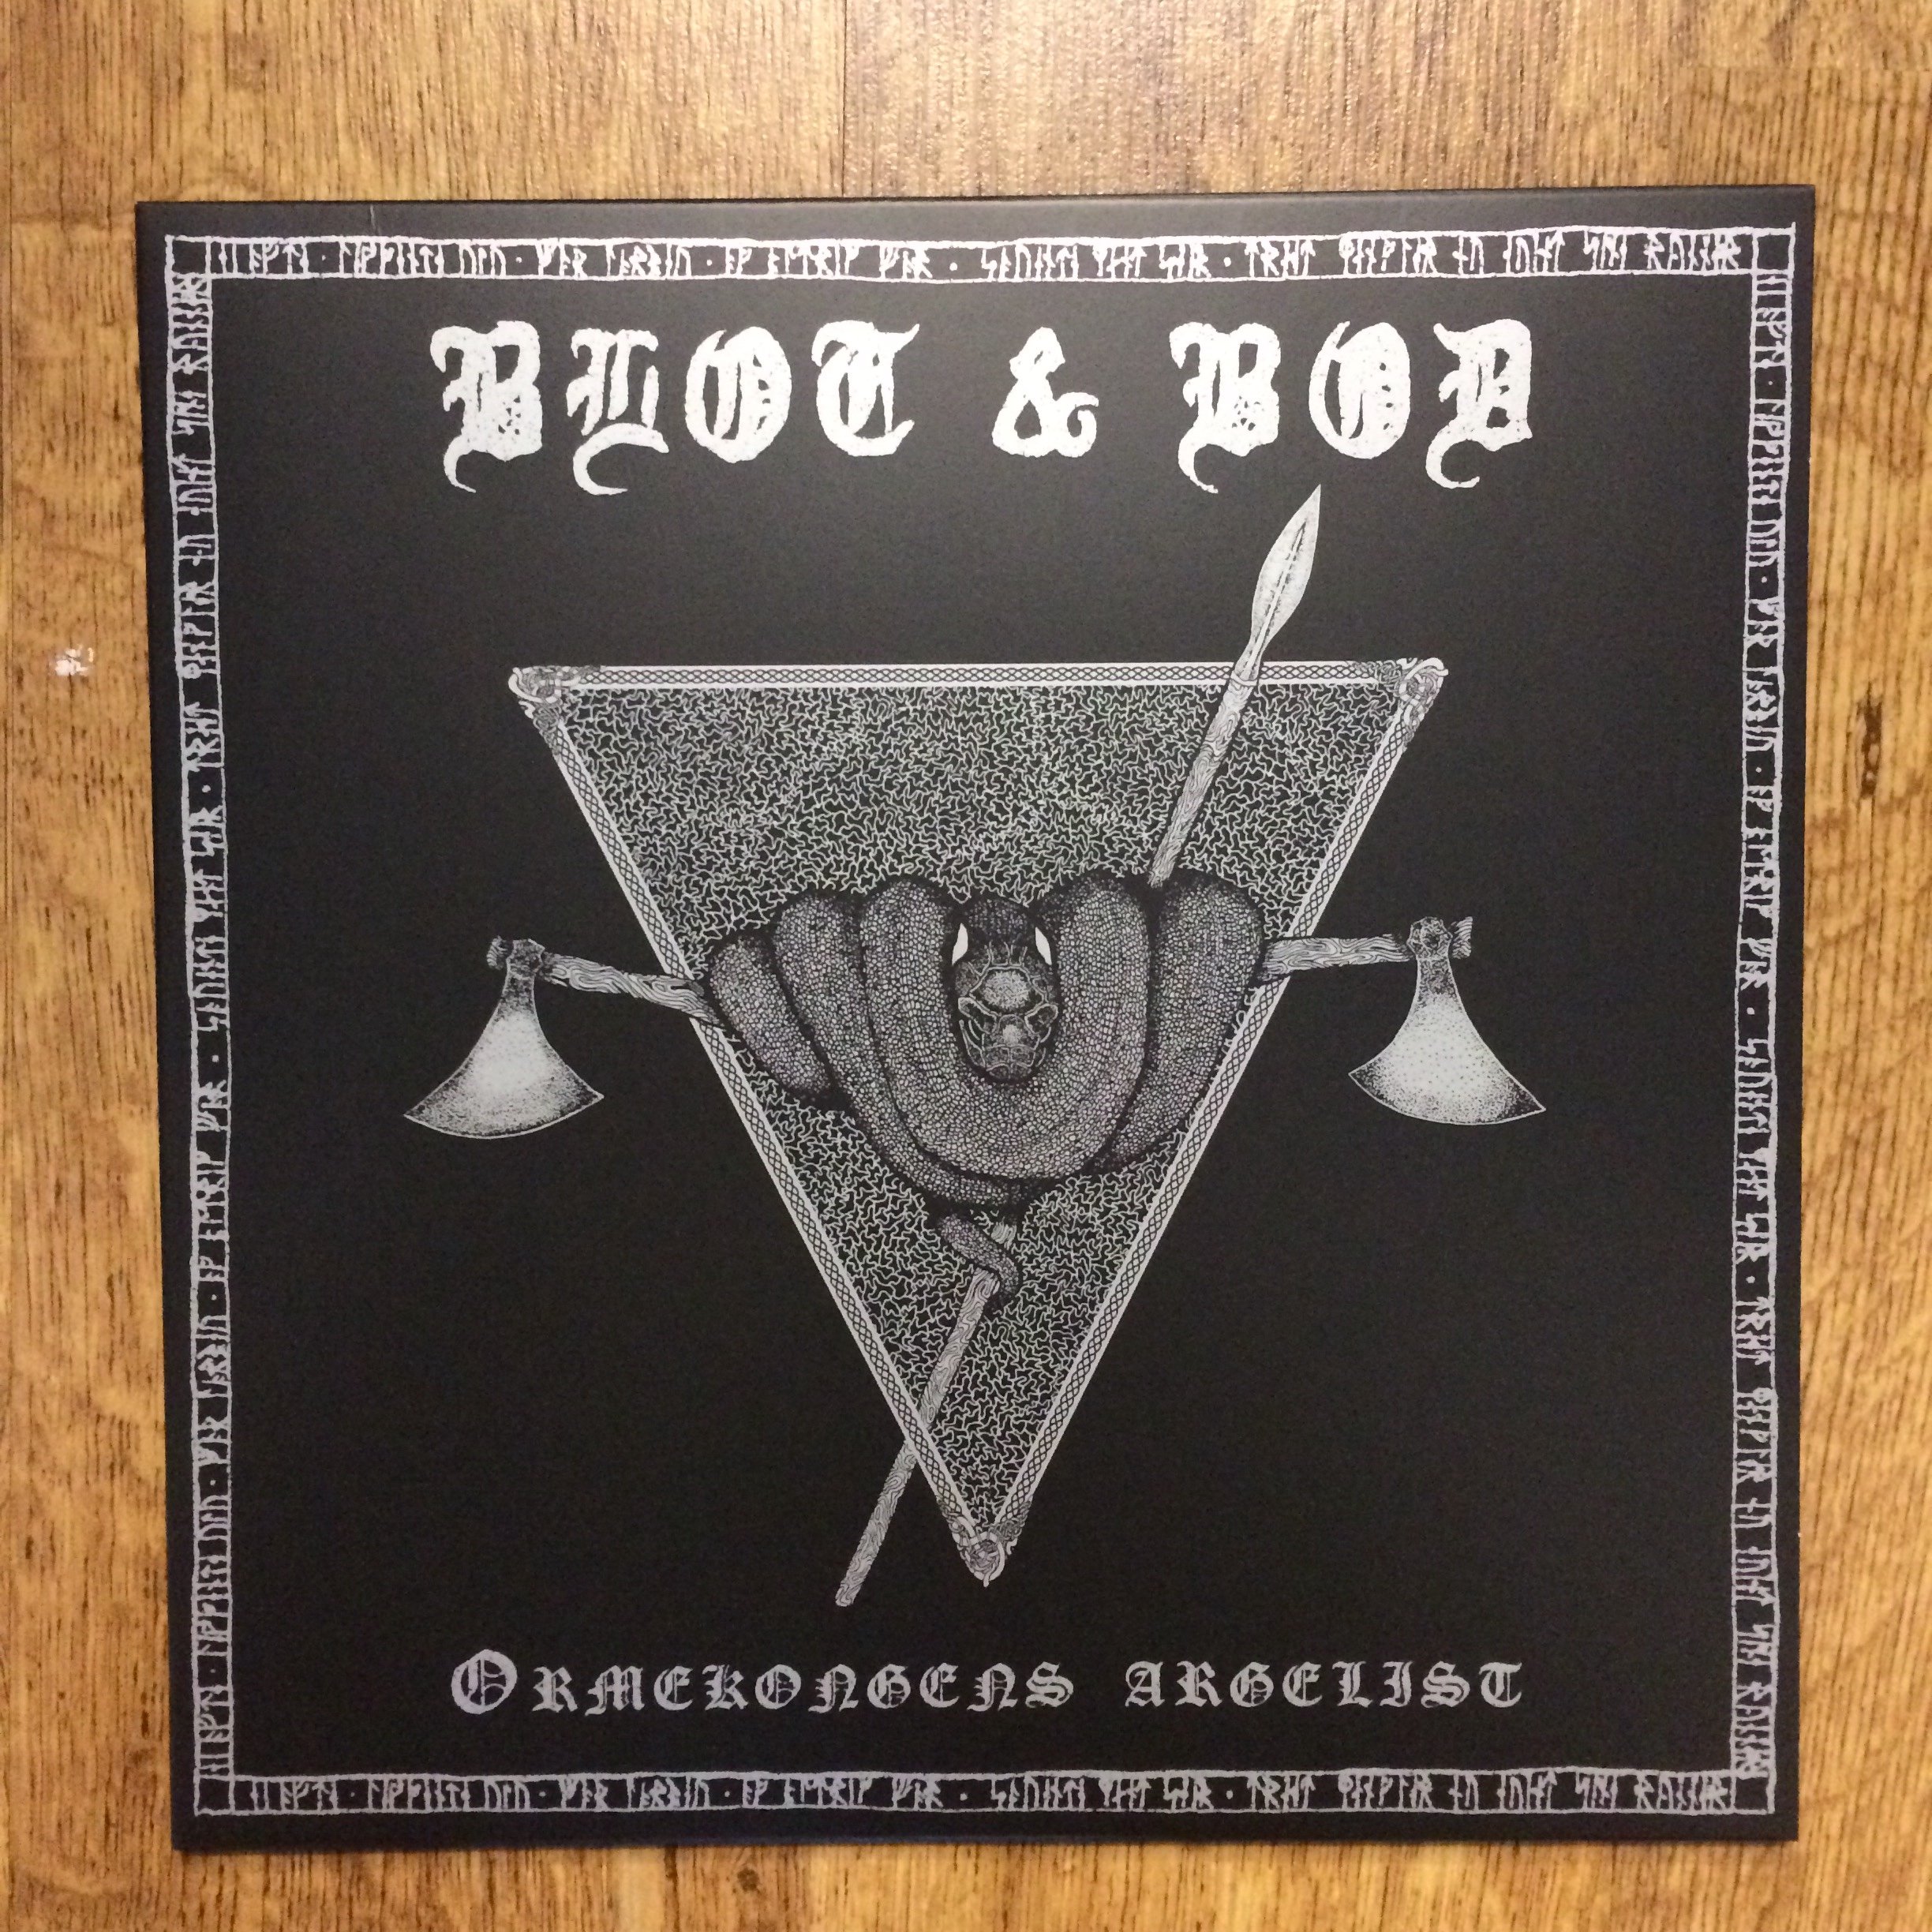 Photo of the Blot & Bod - "Ormekongens argelist" LP (Black vinyl)